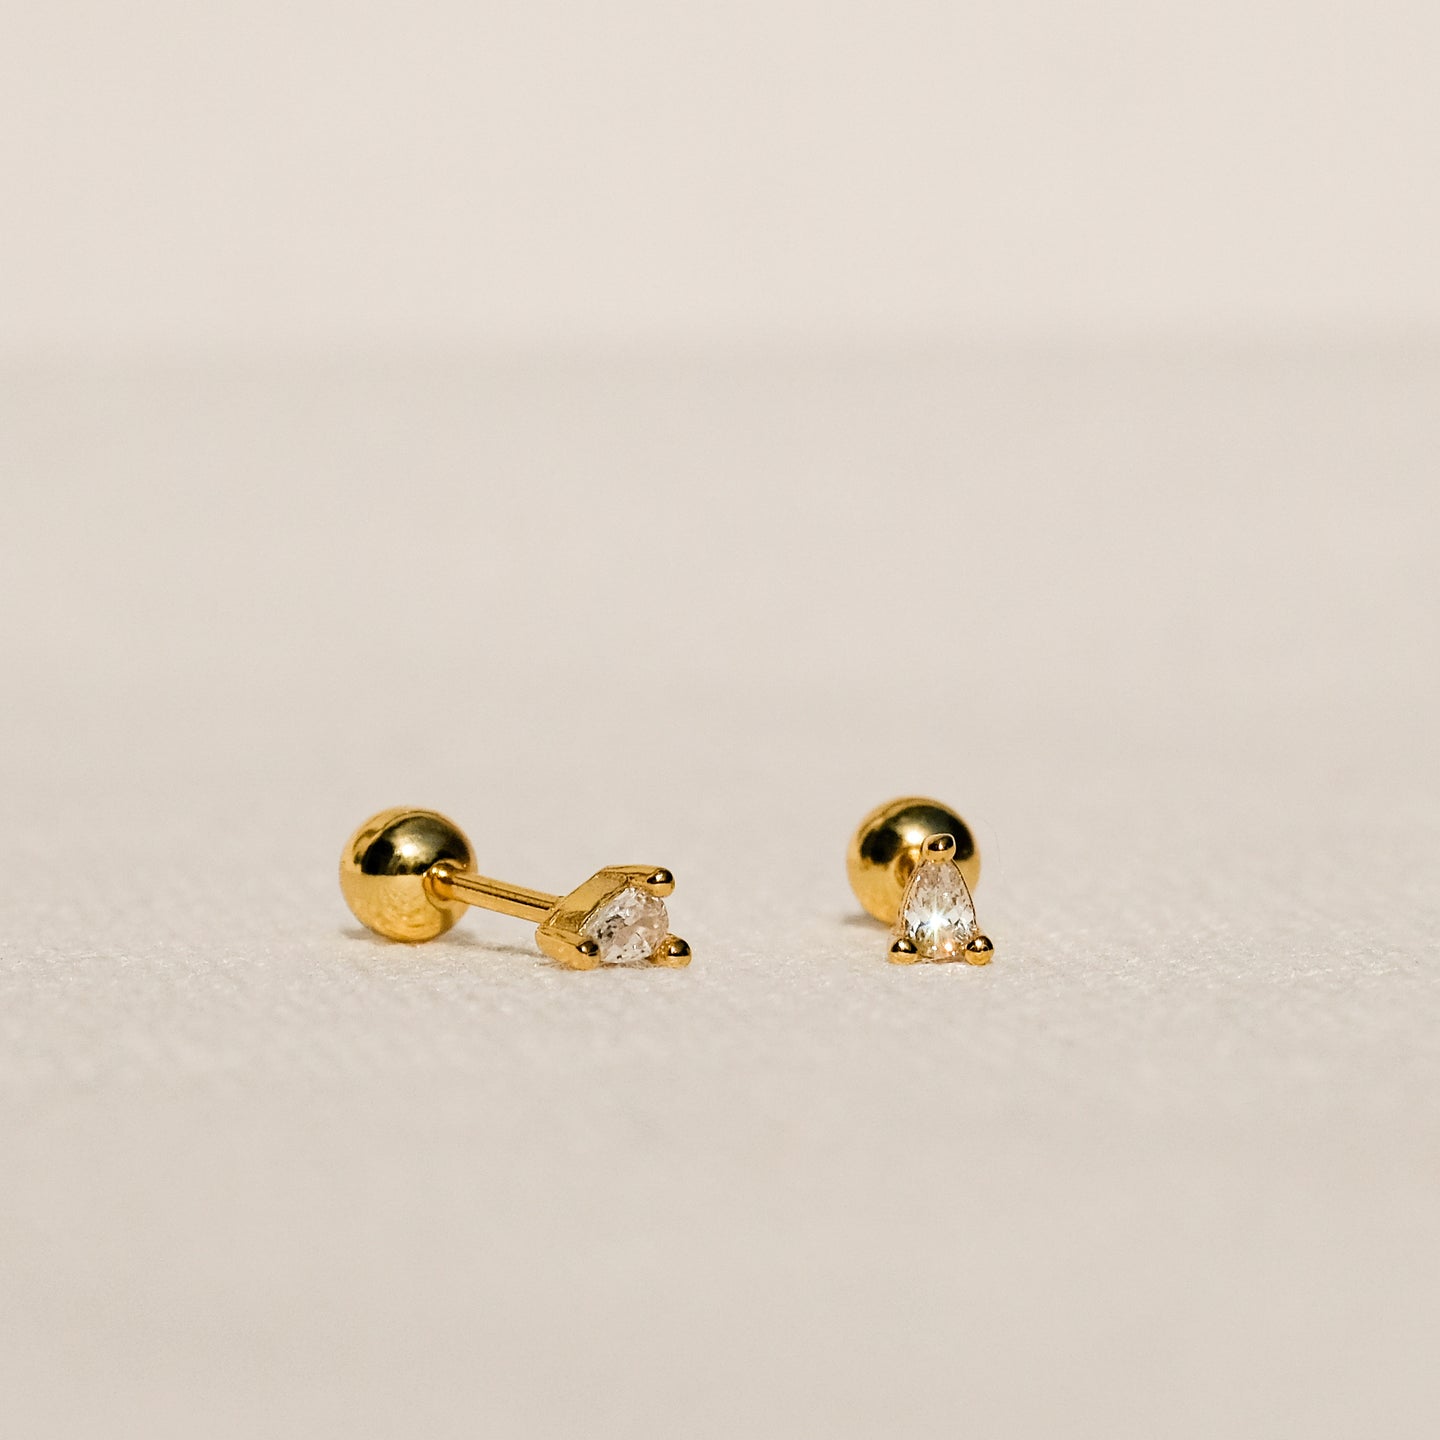 products/lanu-cz-stud-earrings-18k-gold-vermeil-1.jpg